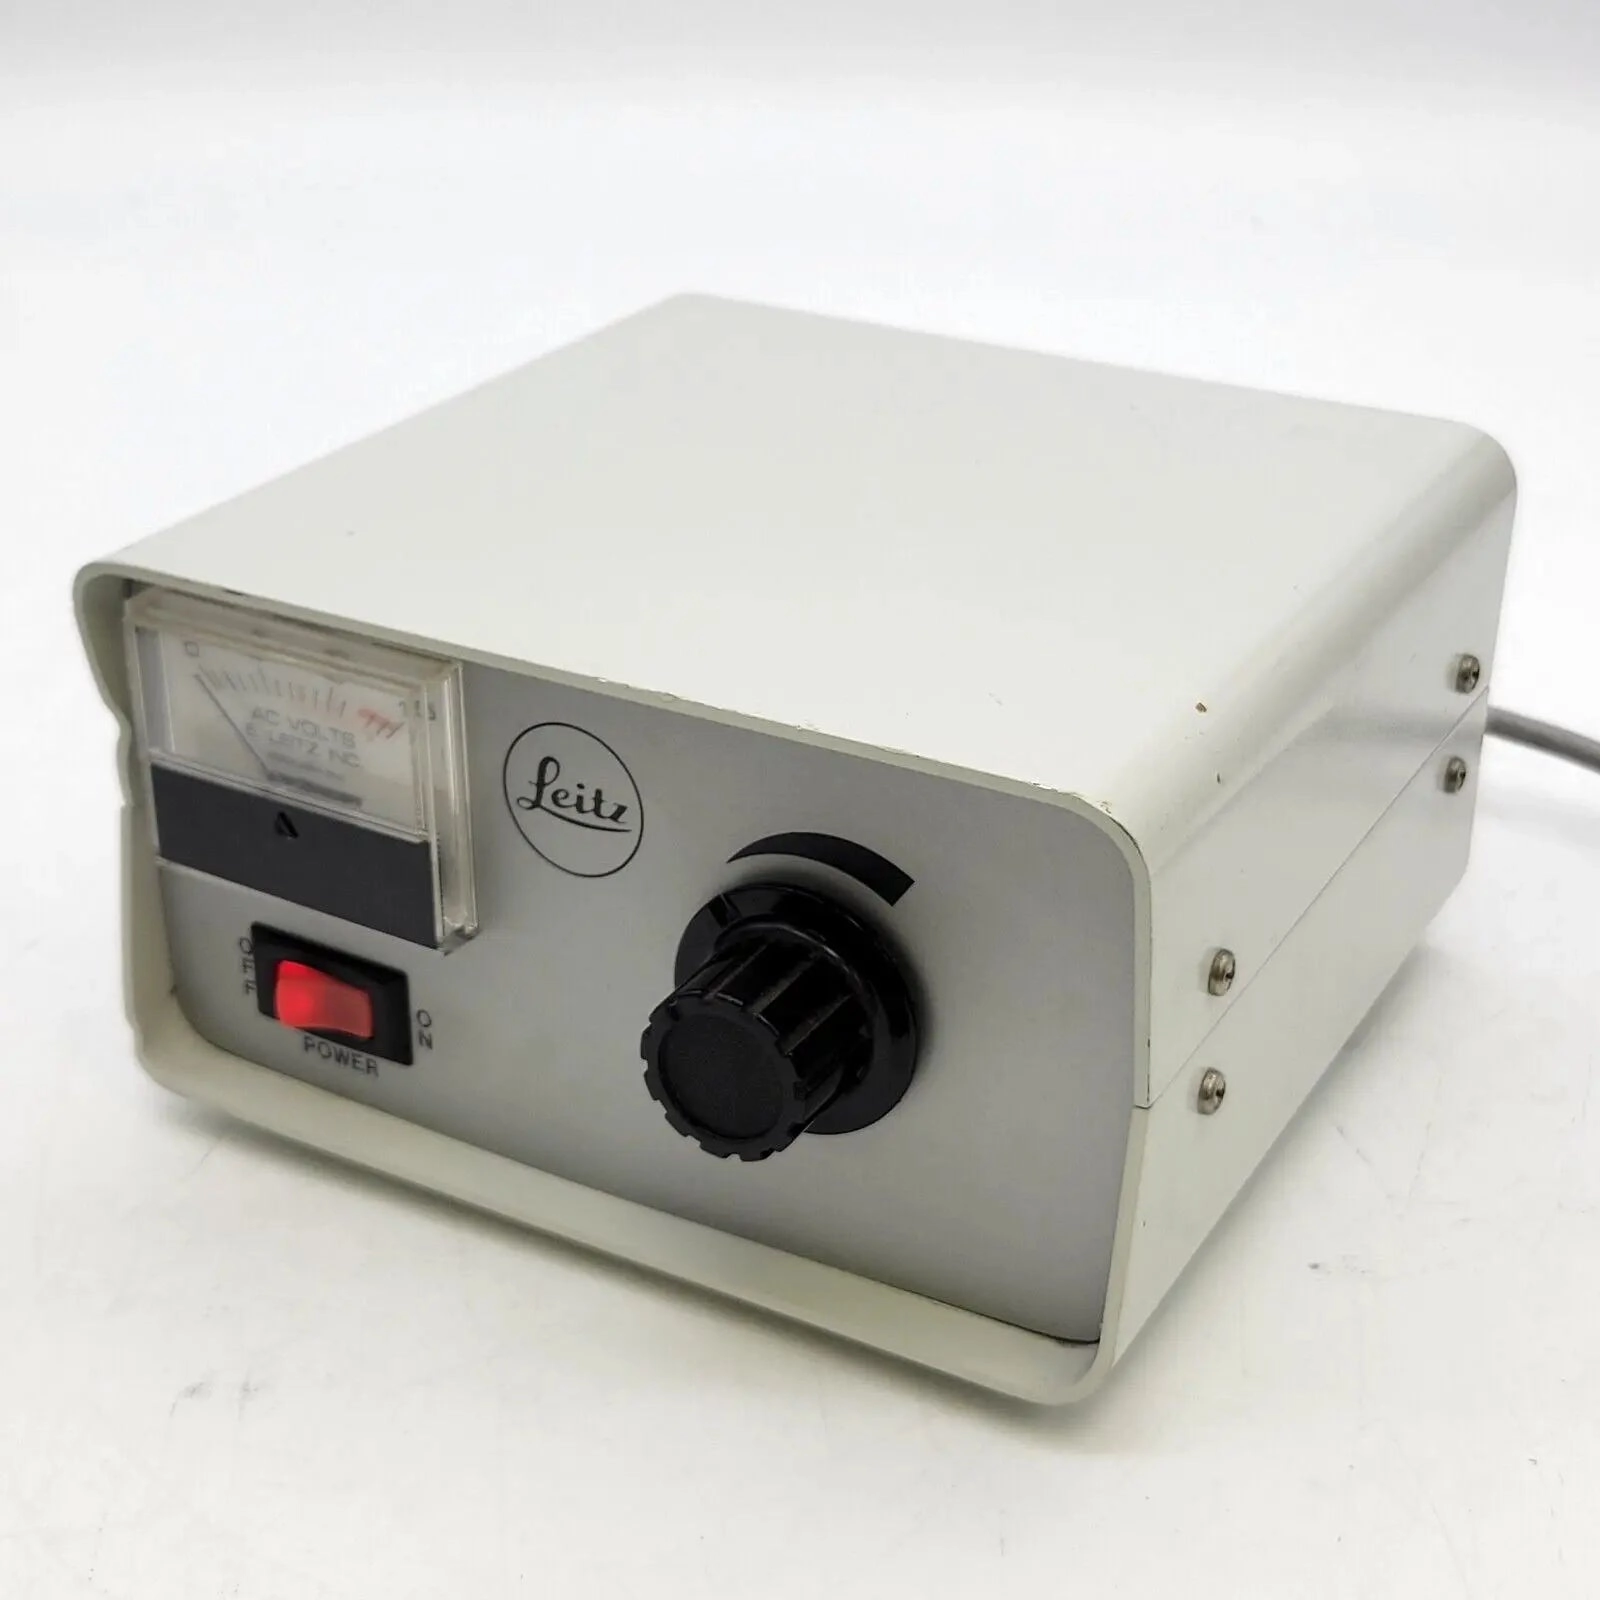 Leitz Wild Leica Microscope Halogen Lamphouse Power Supply 050-262